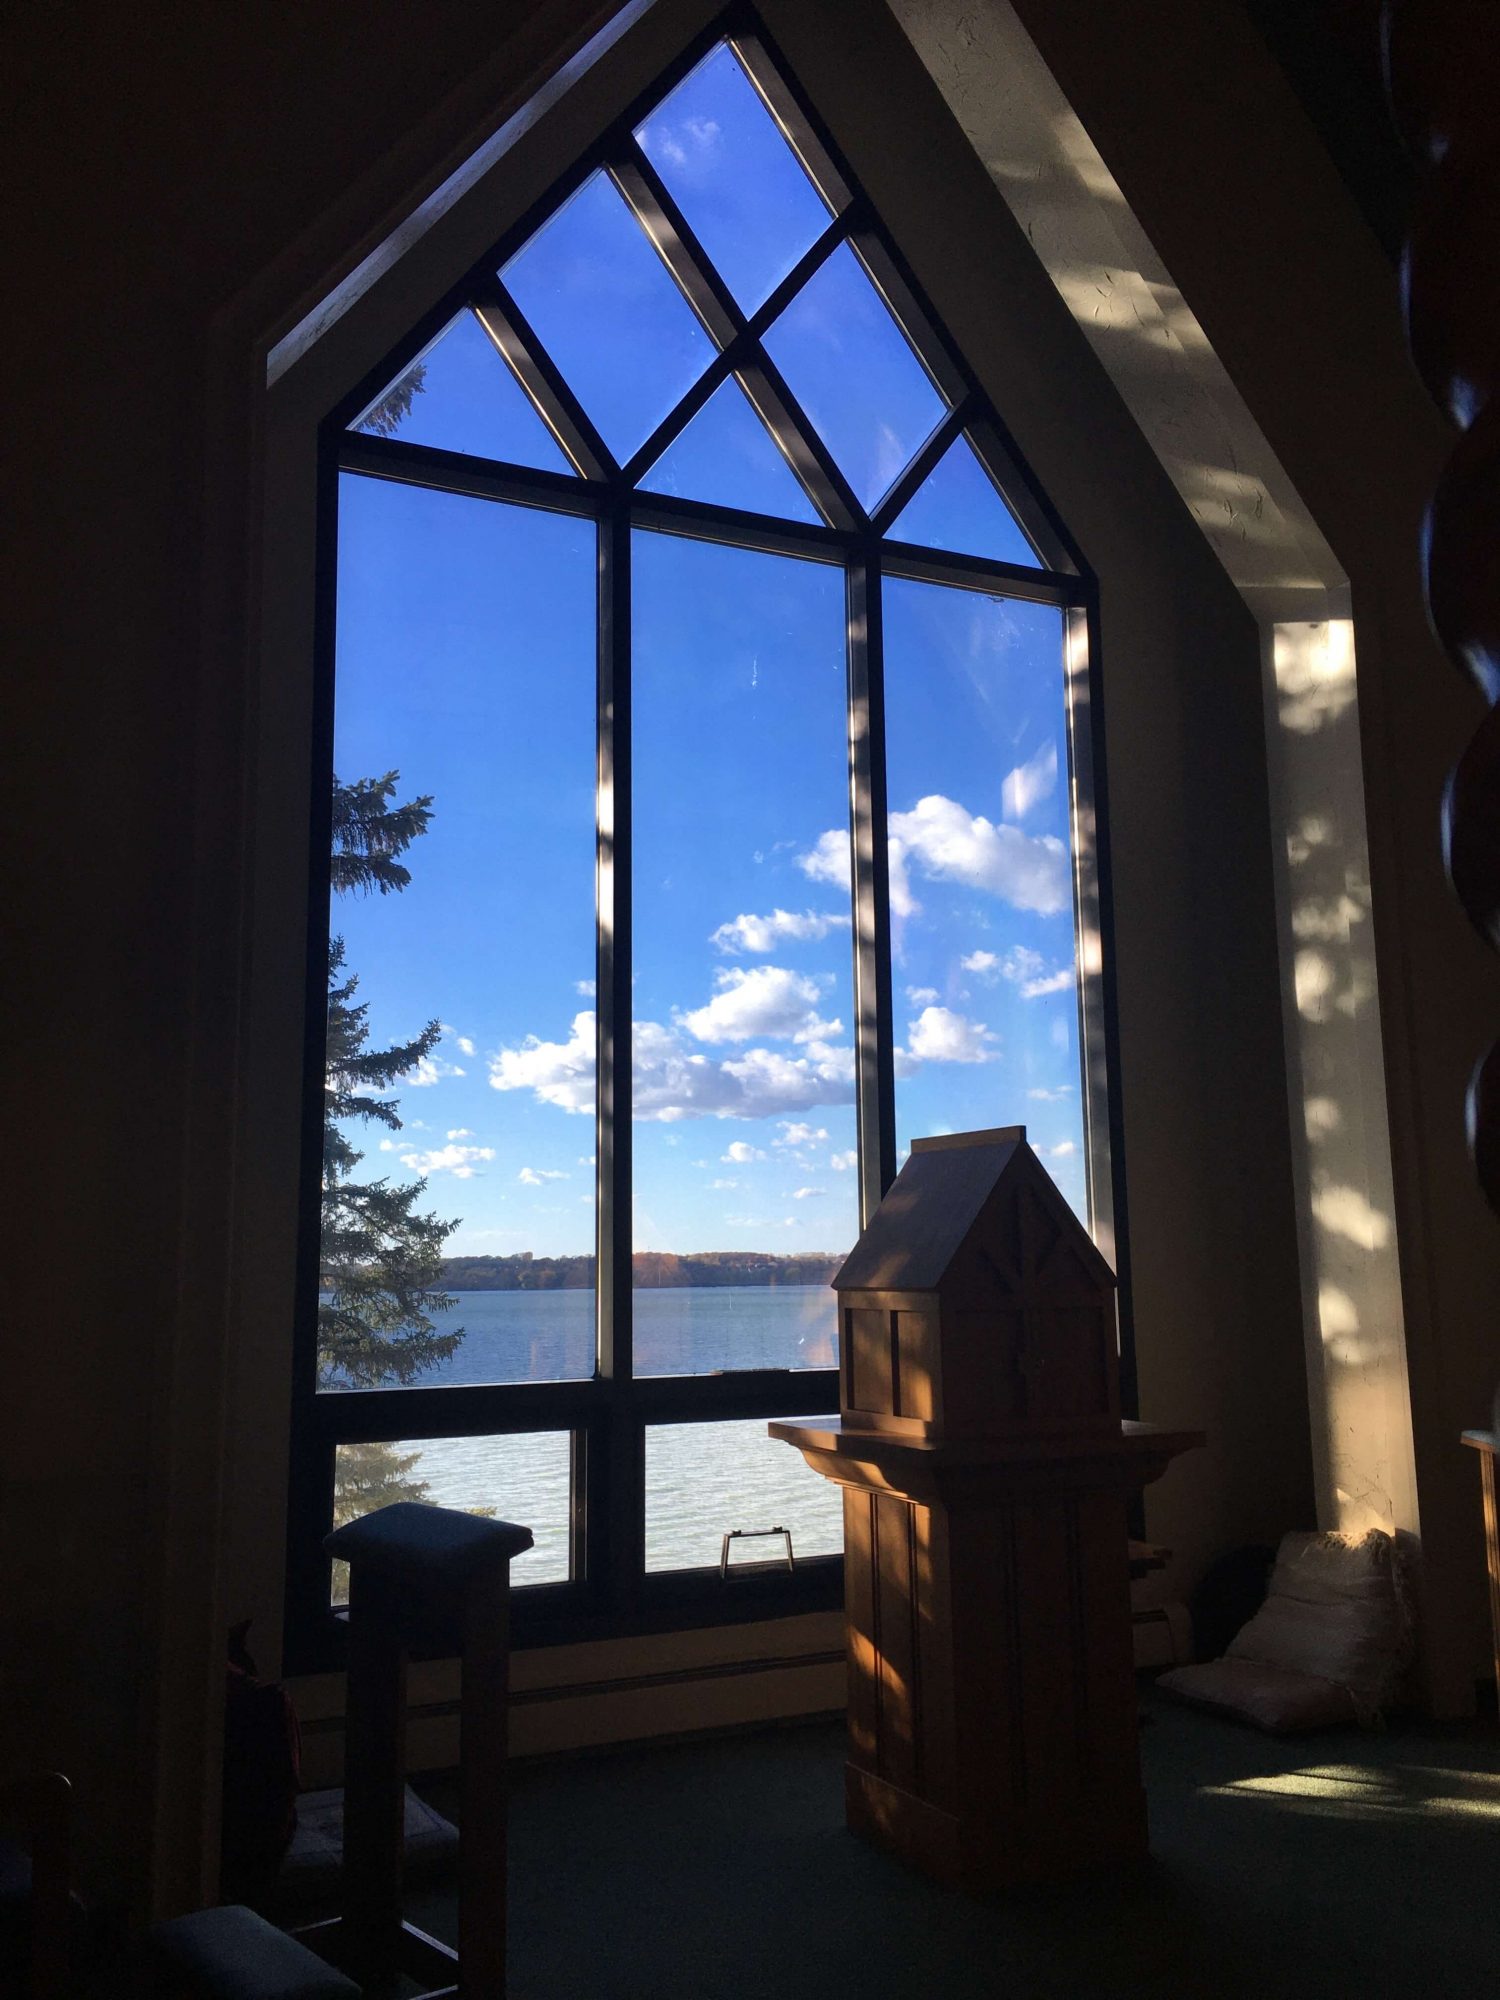 An altar at a window facing scenic Buffalo Lake